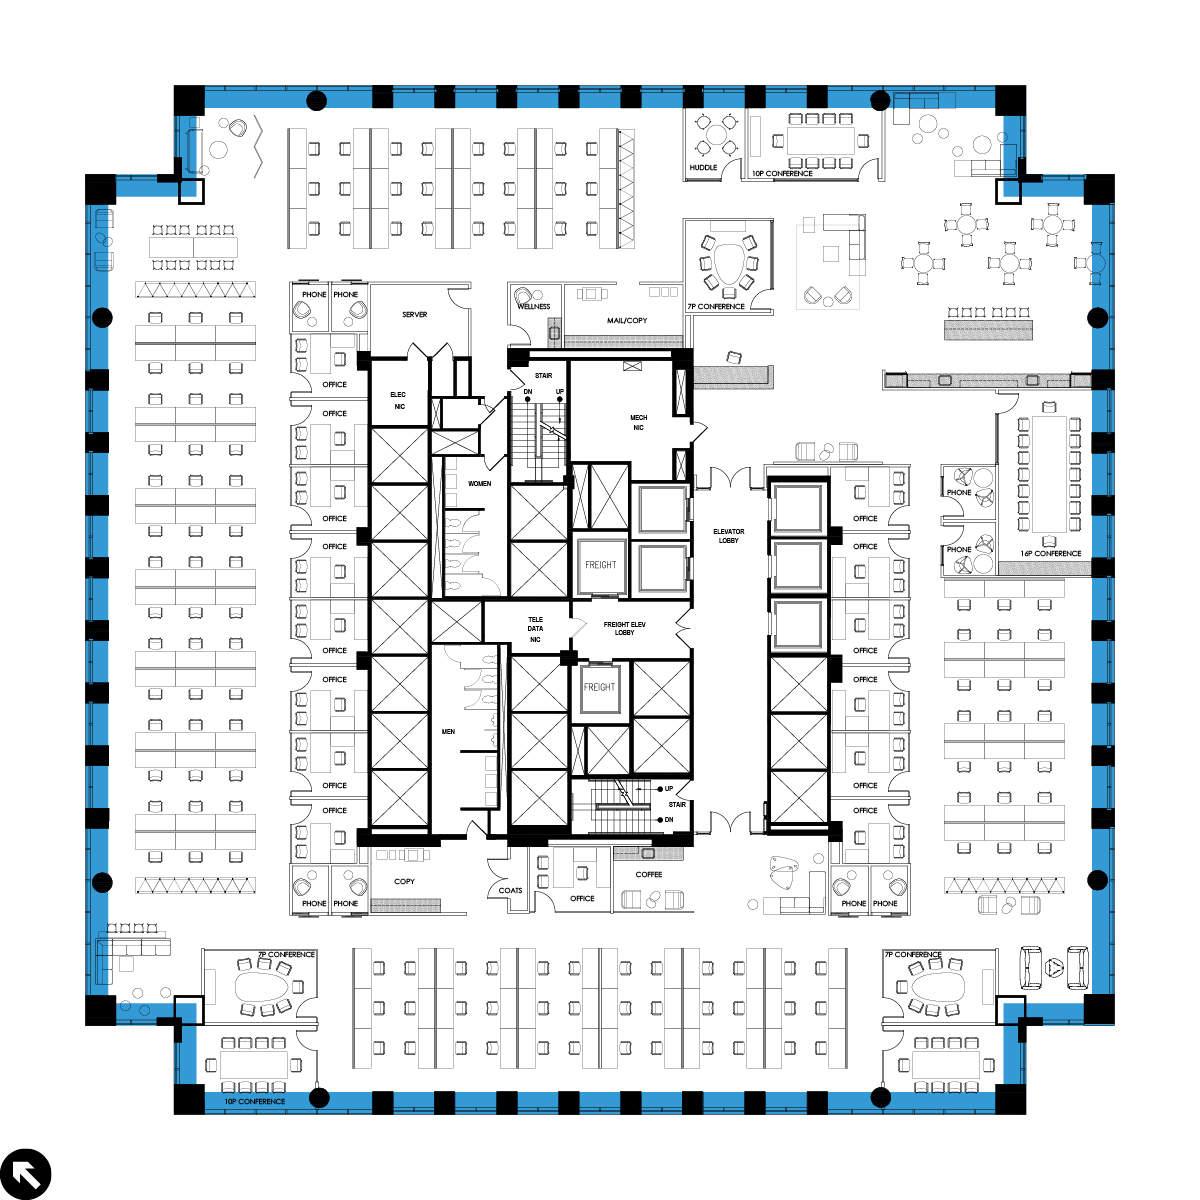 Proposed Open Layout Floorplan